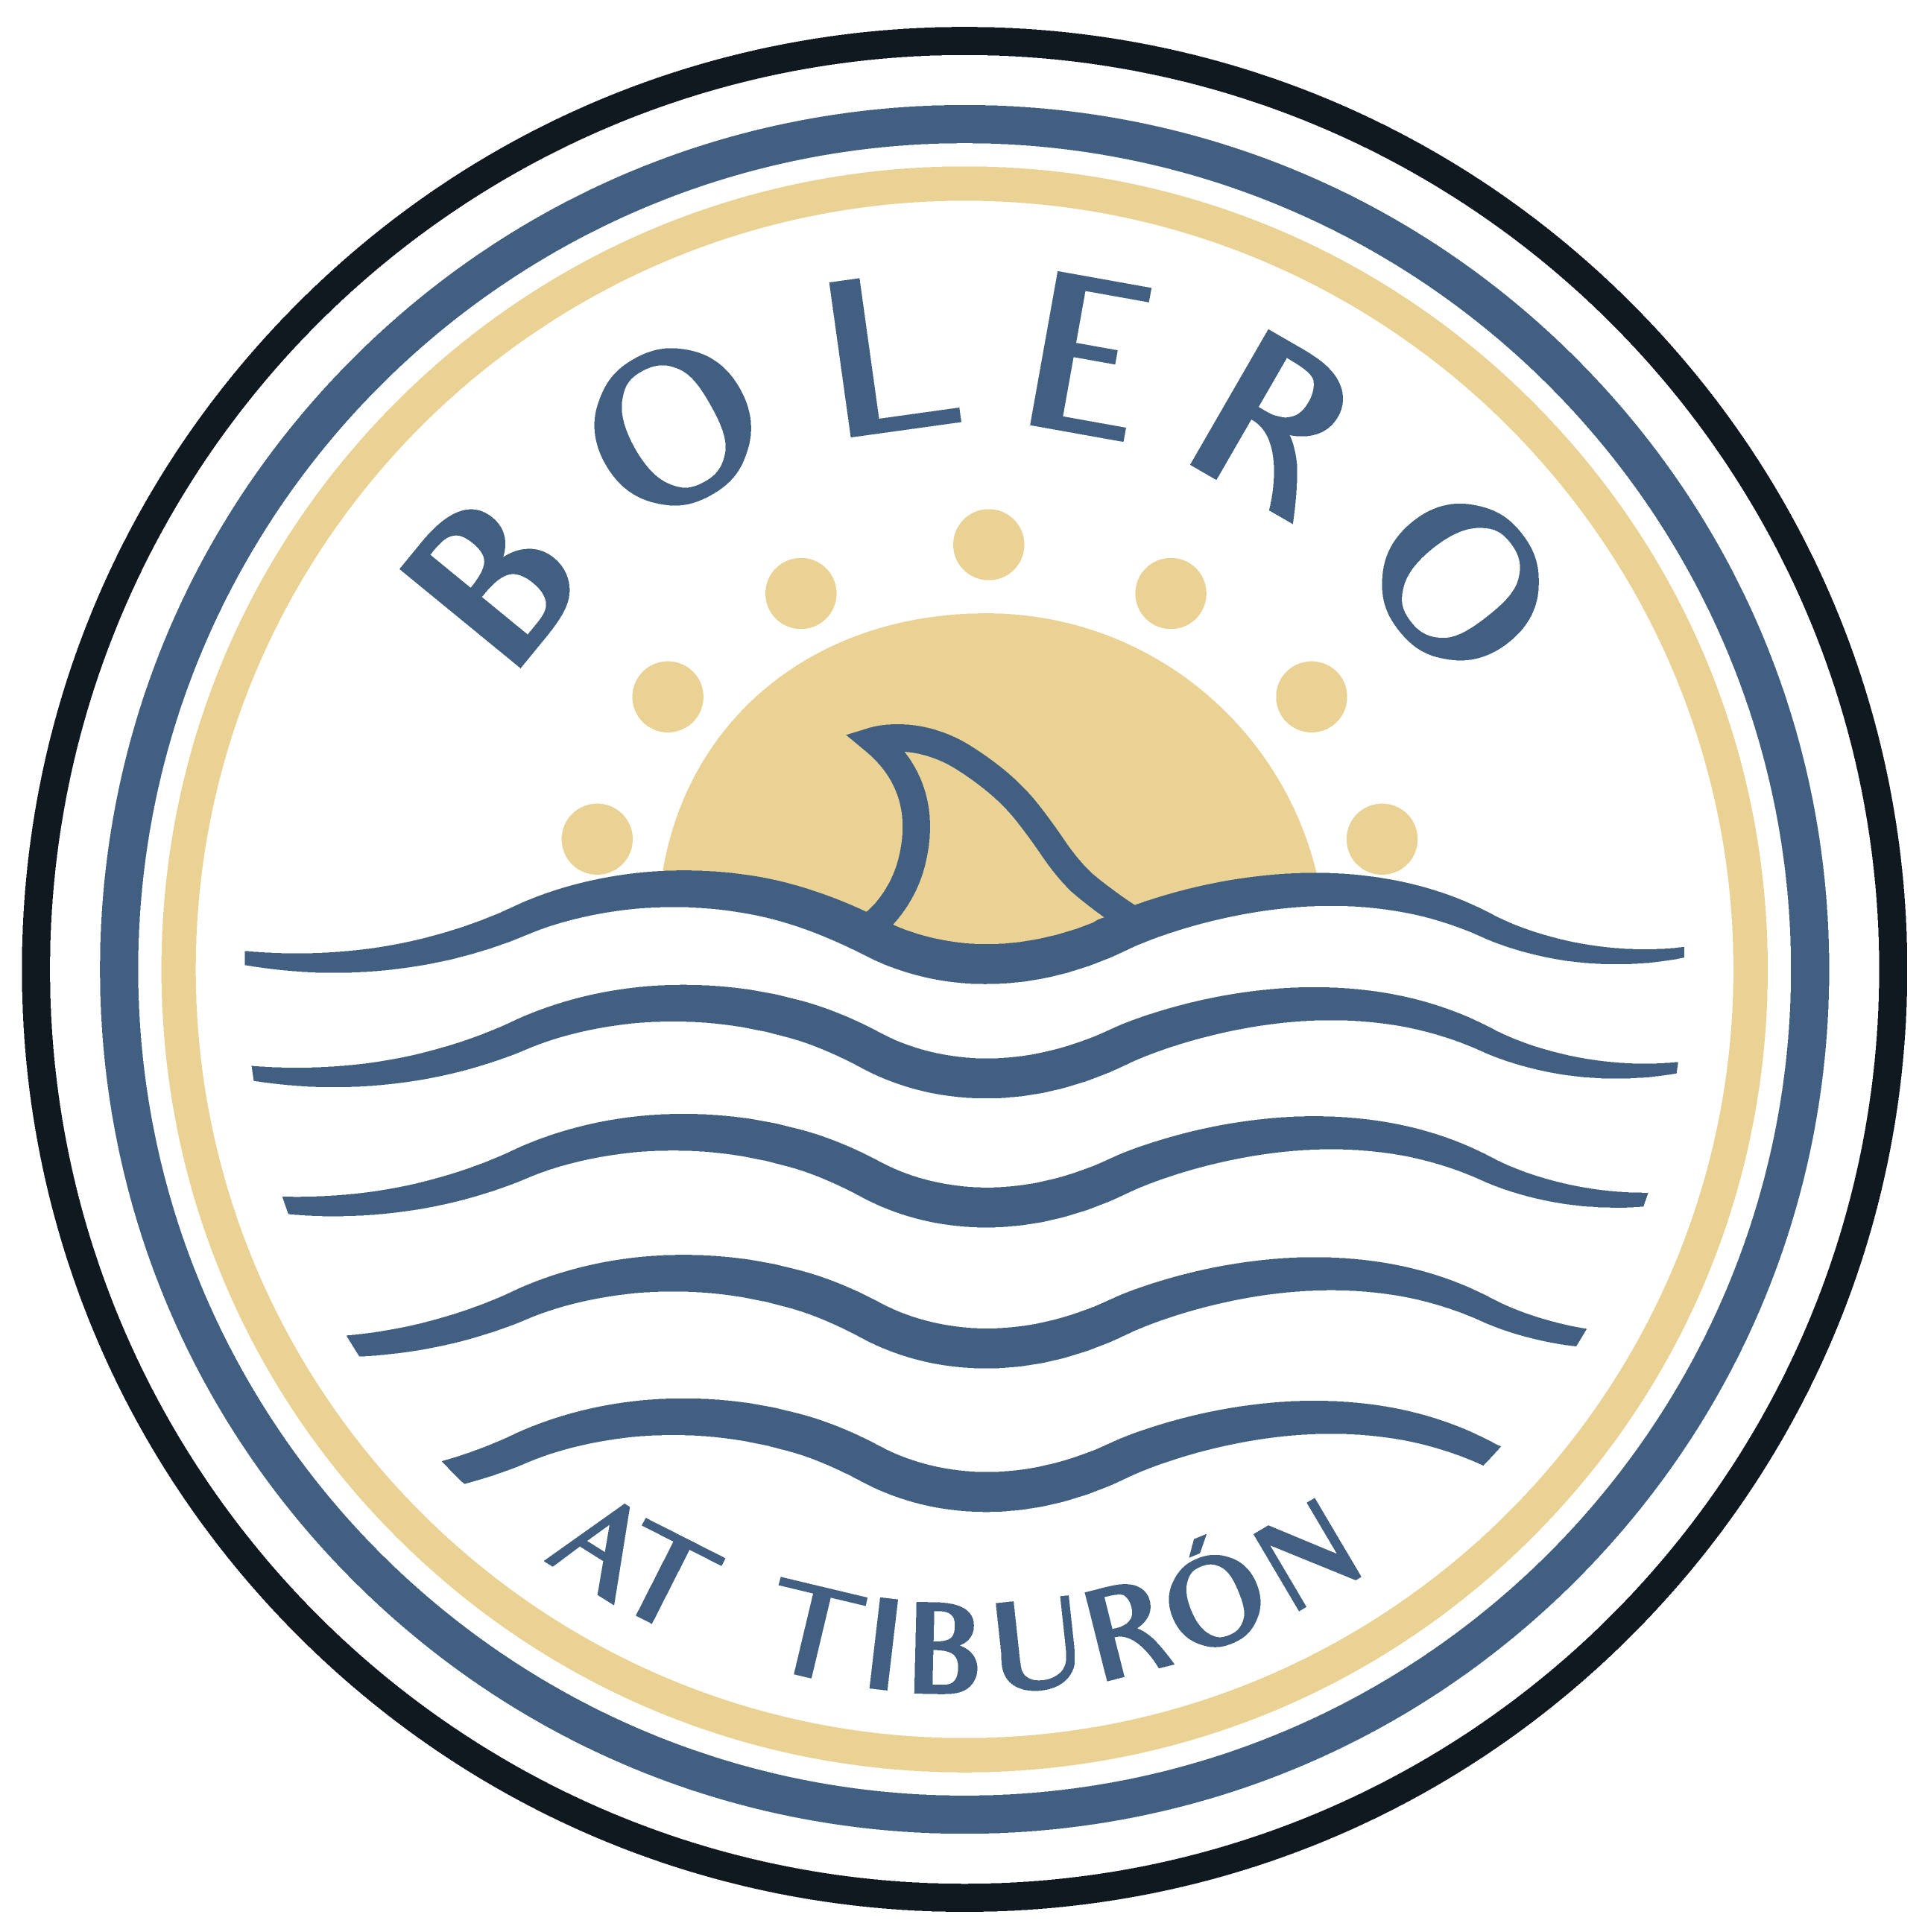 Bolero at Tiburon Condominium Association Logo